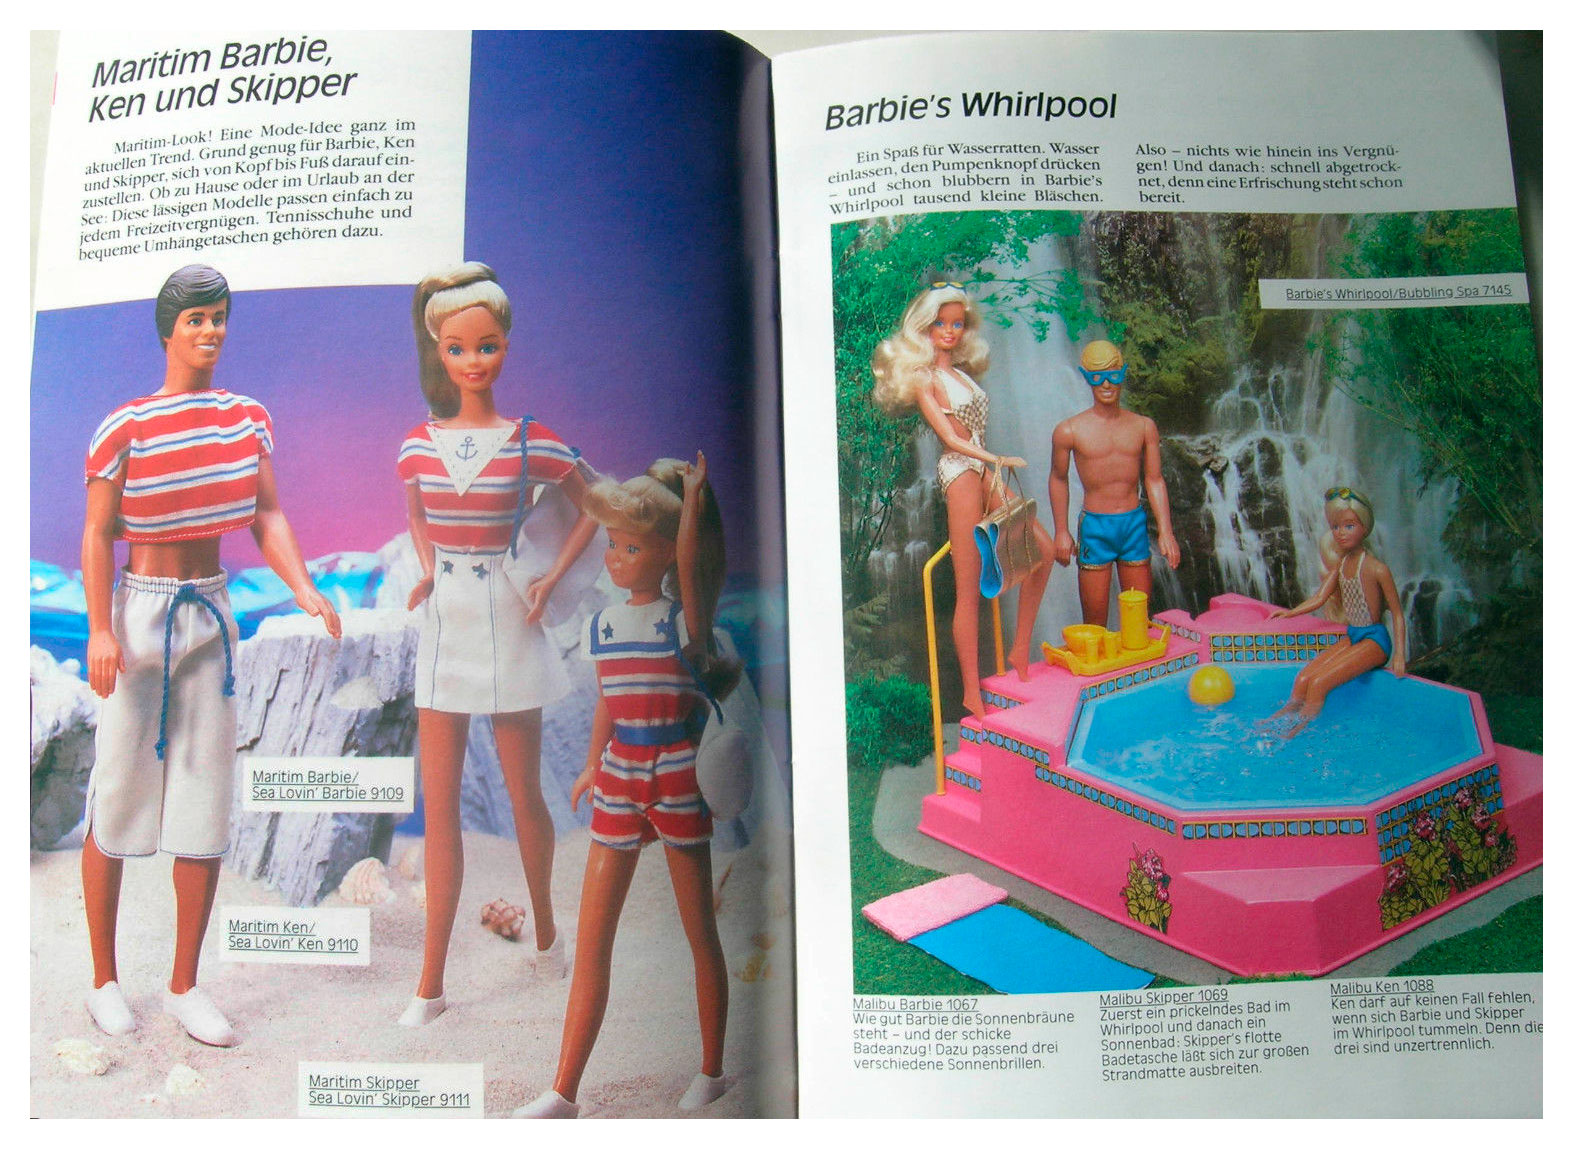 From 1985 German Barbie Journal